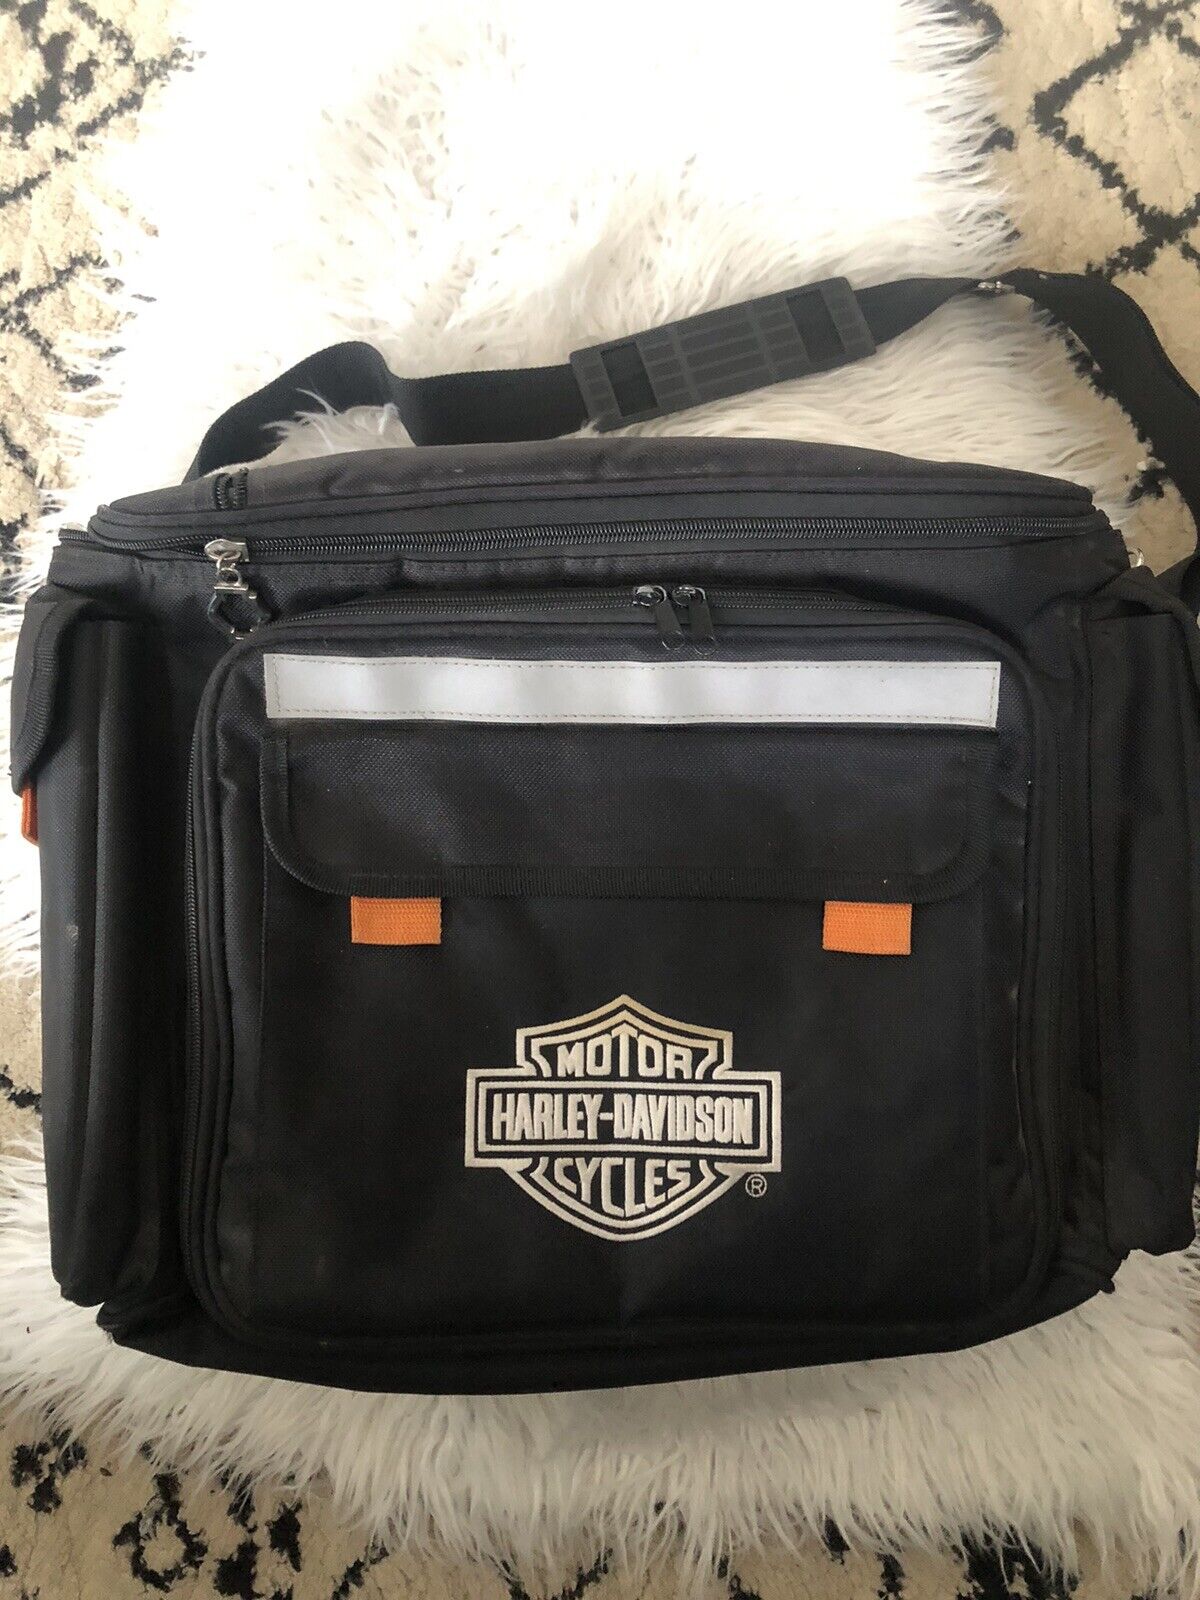 Harley Davidson Picnic Set Black Insulated Travel Cooler Bag W/ Supplies.